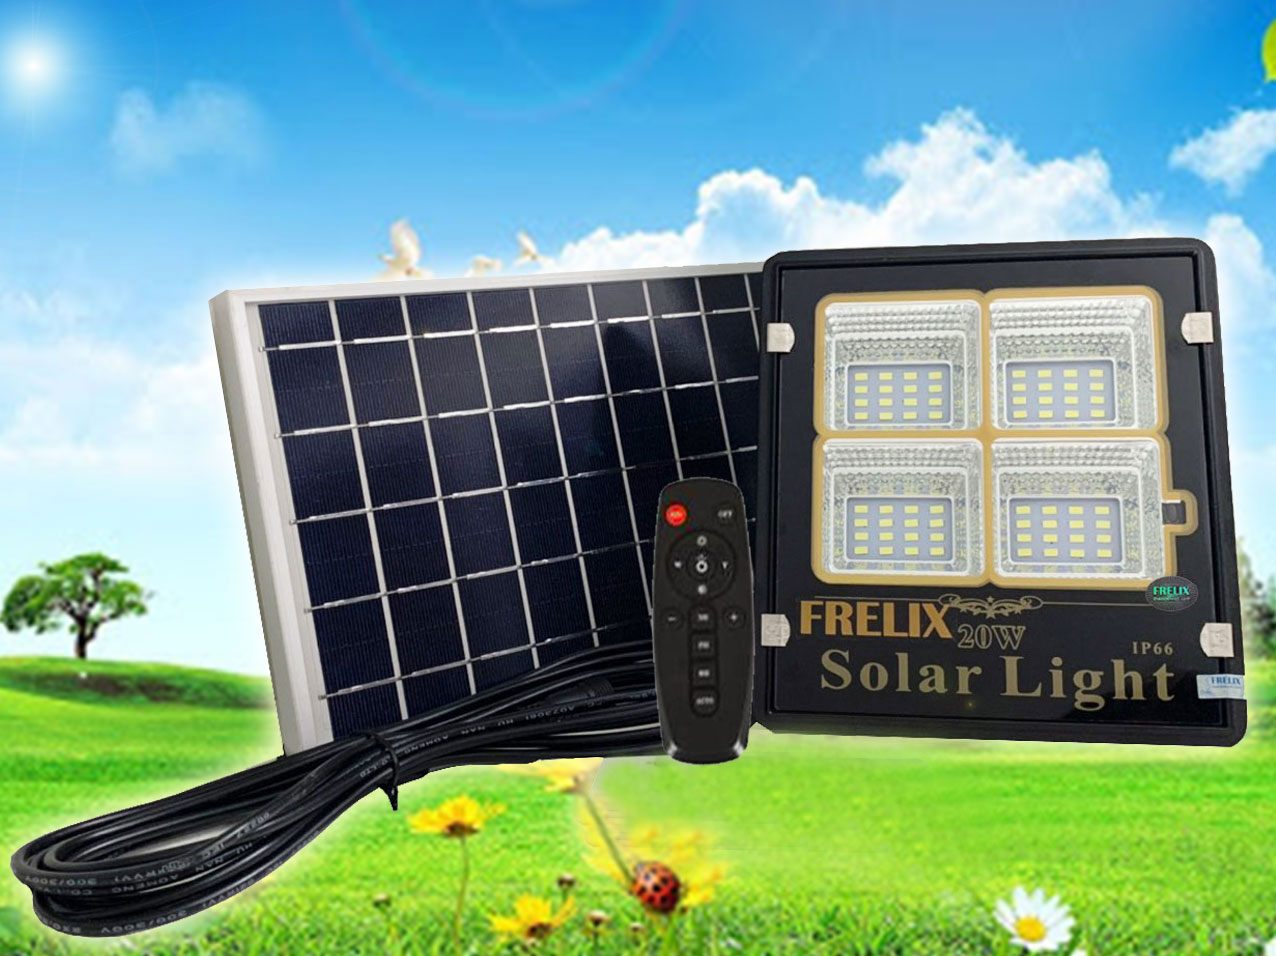 Đèn năng lượng mặt trời FRELIX Solar Light 20W 4 khoang led